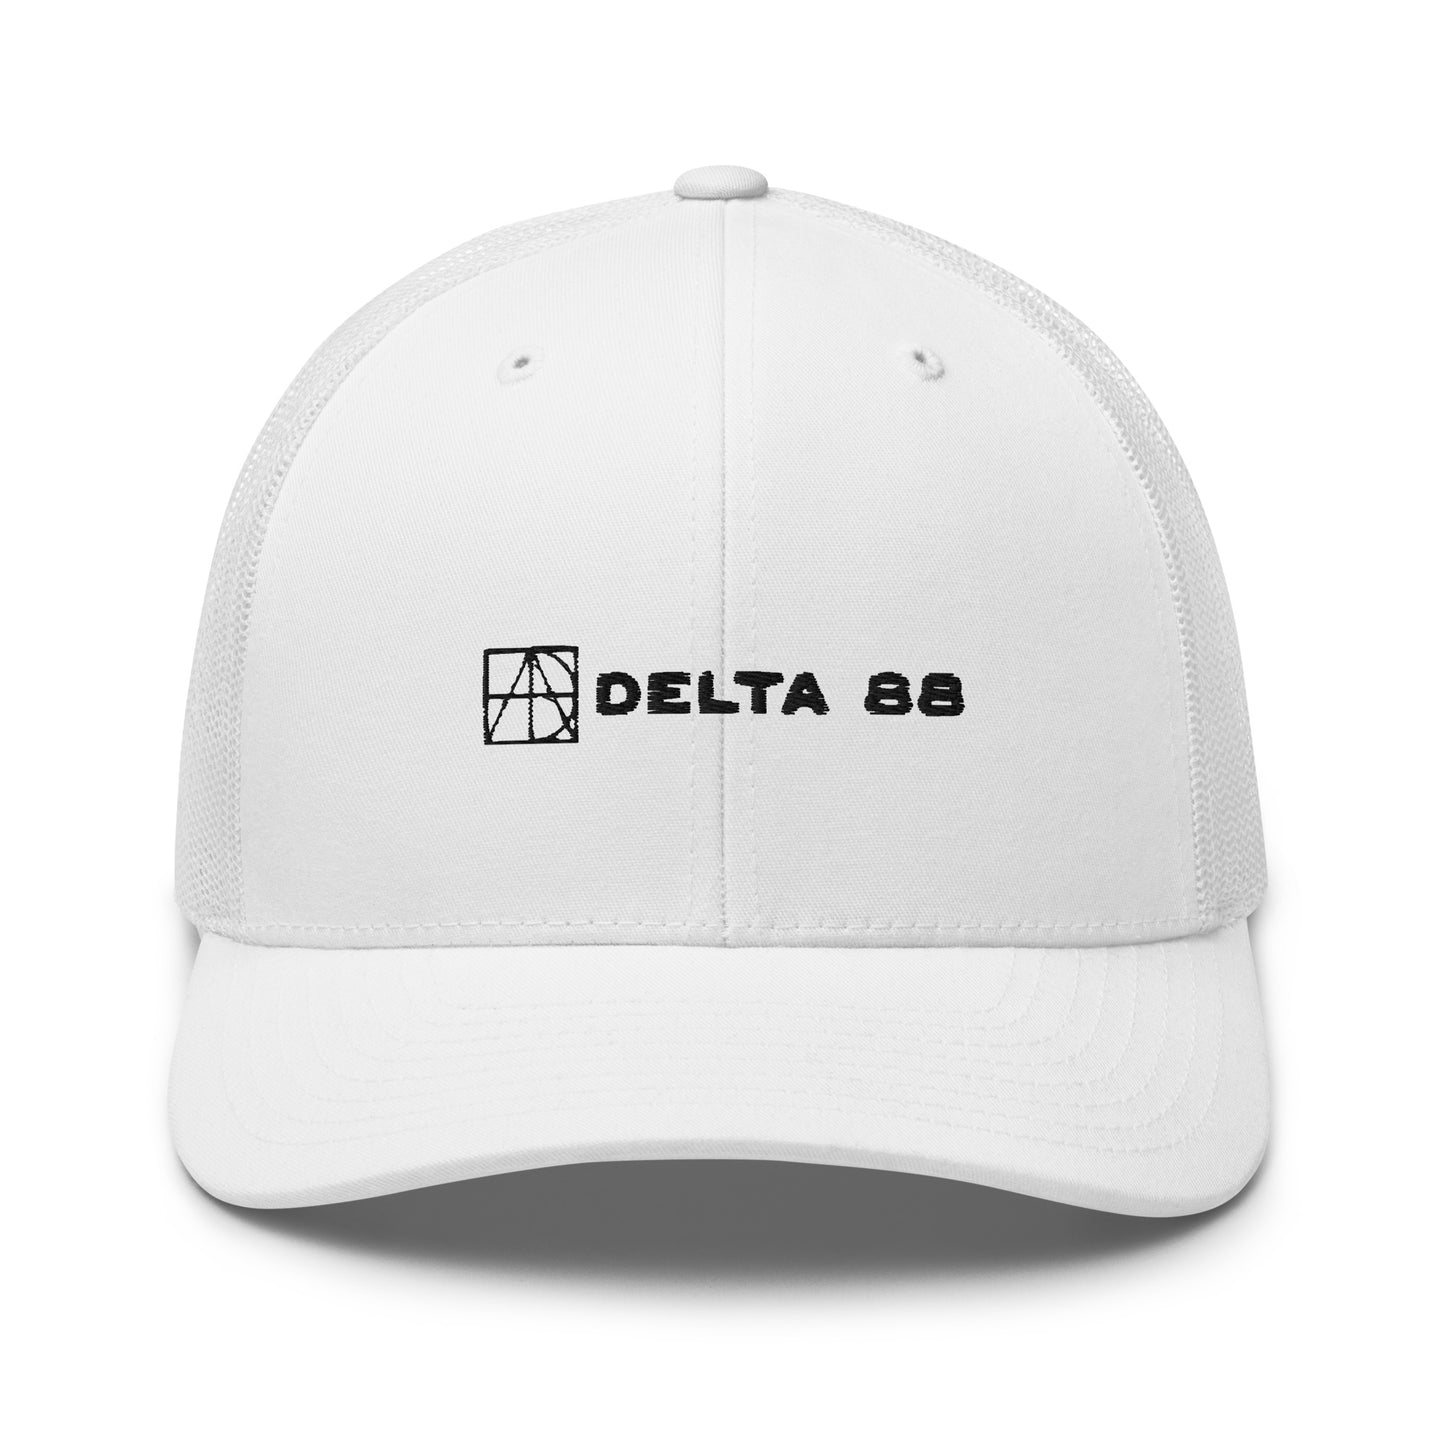 Delta 88 White Cap